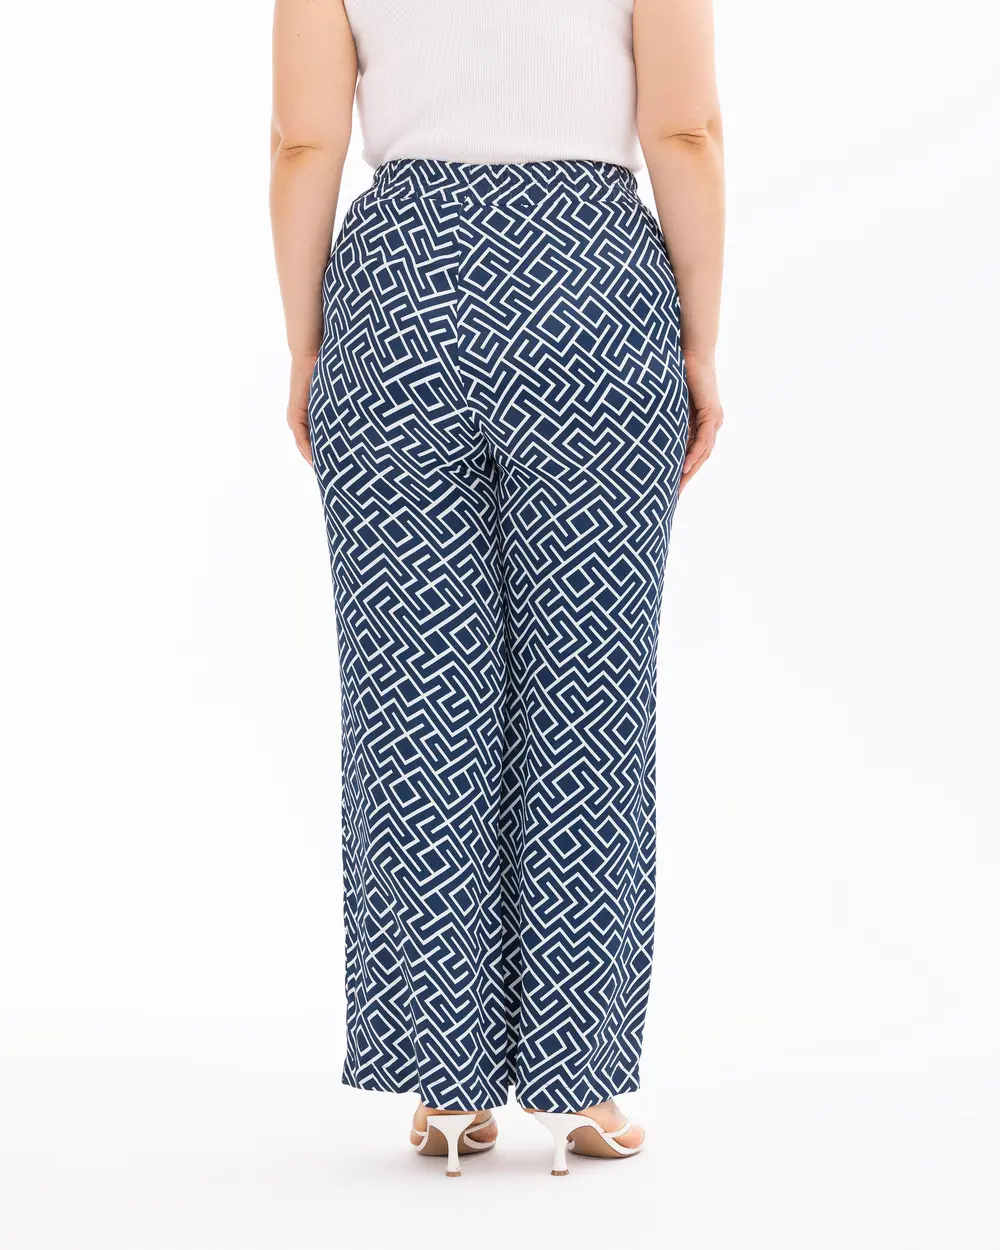 Plus Size Satin Woven Geometric Patterned Pants